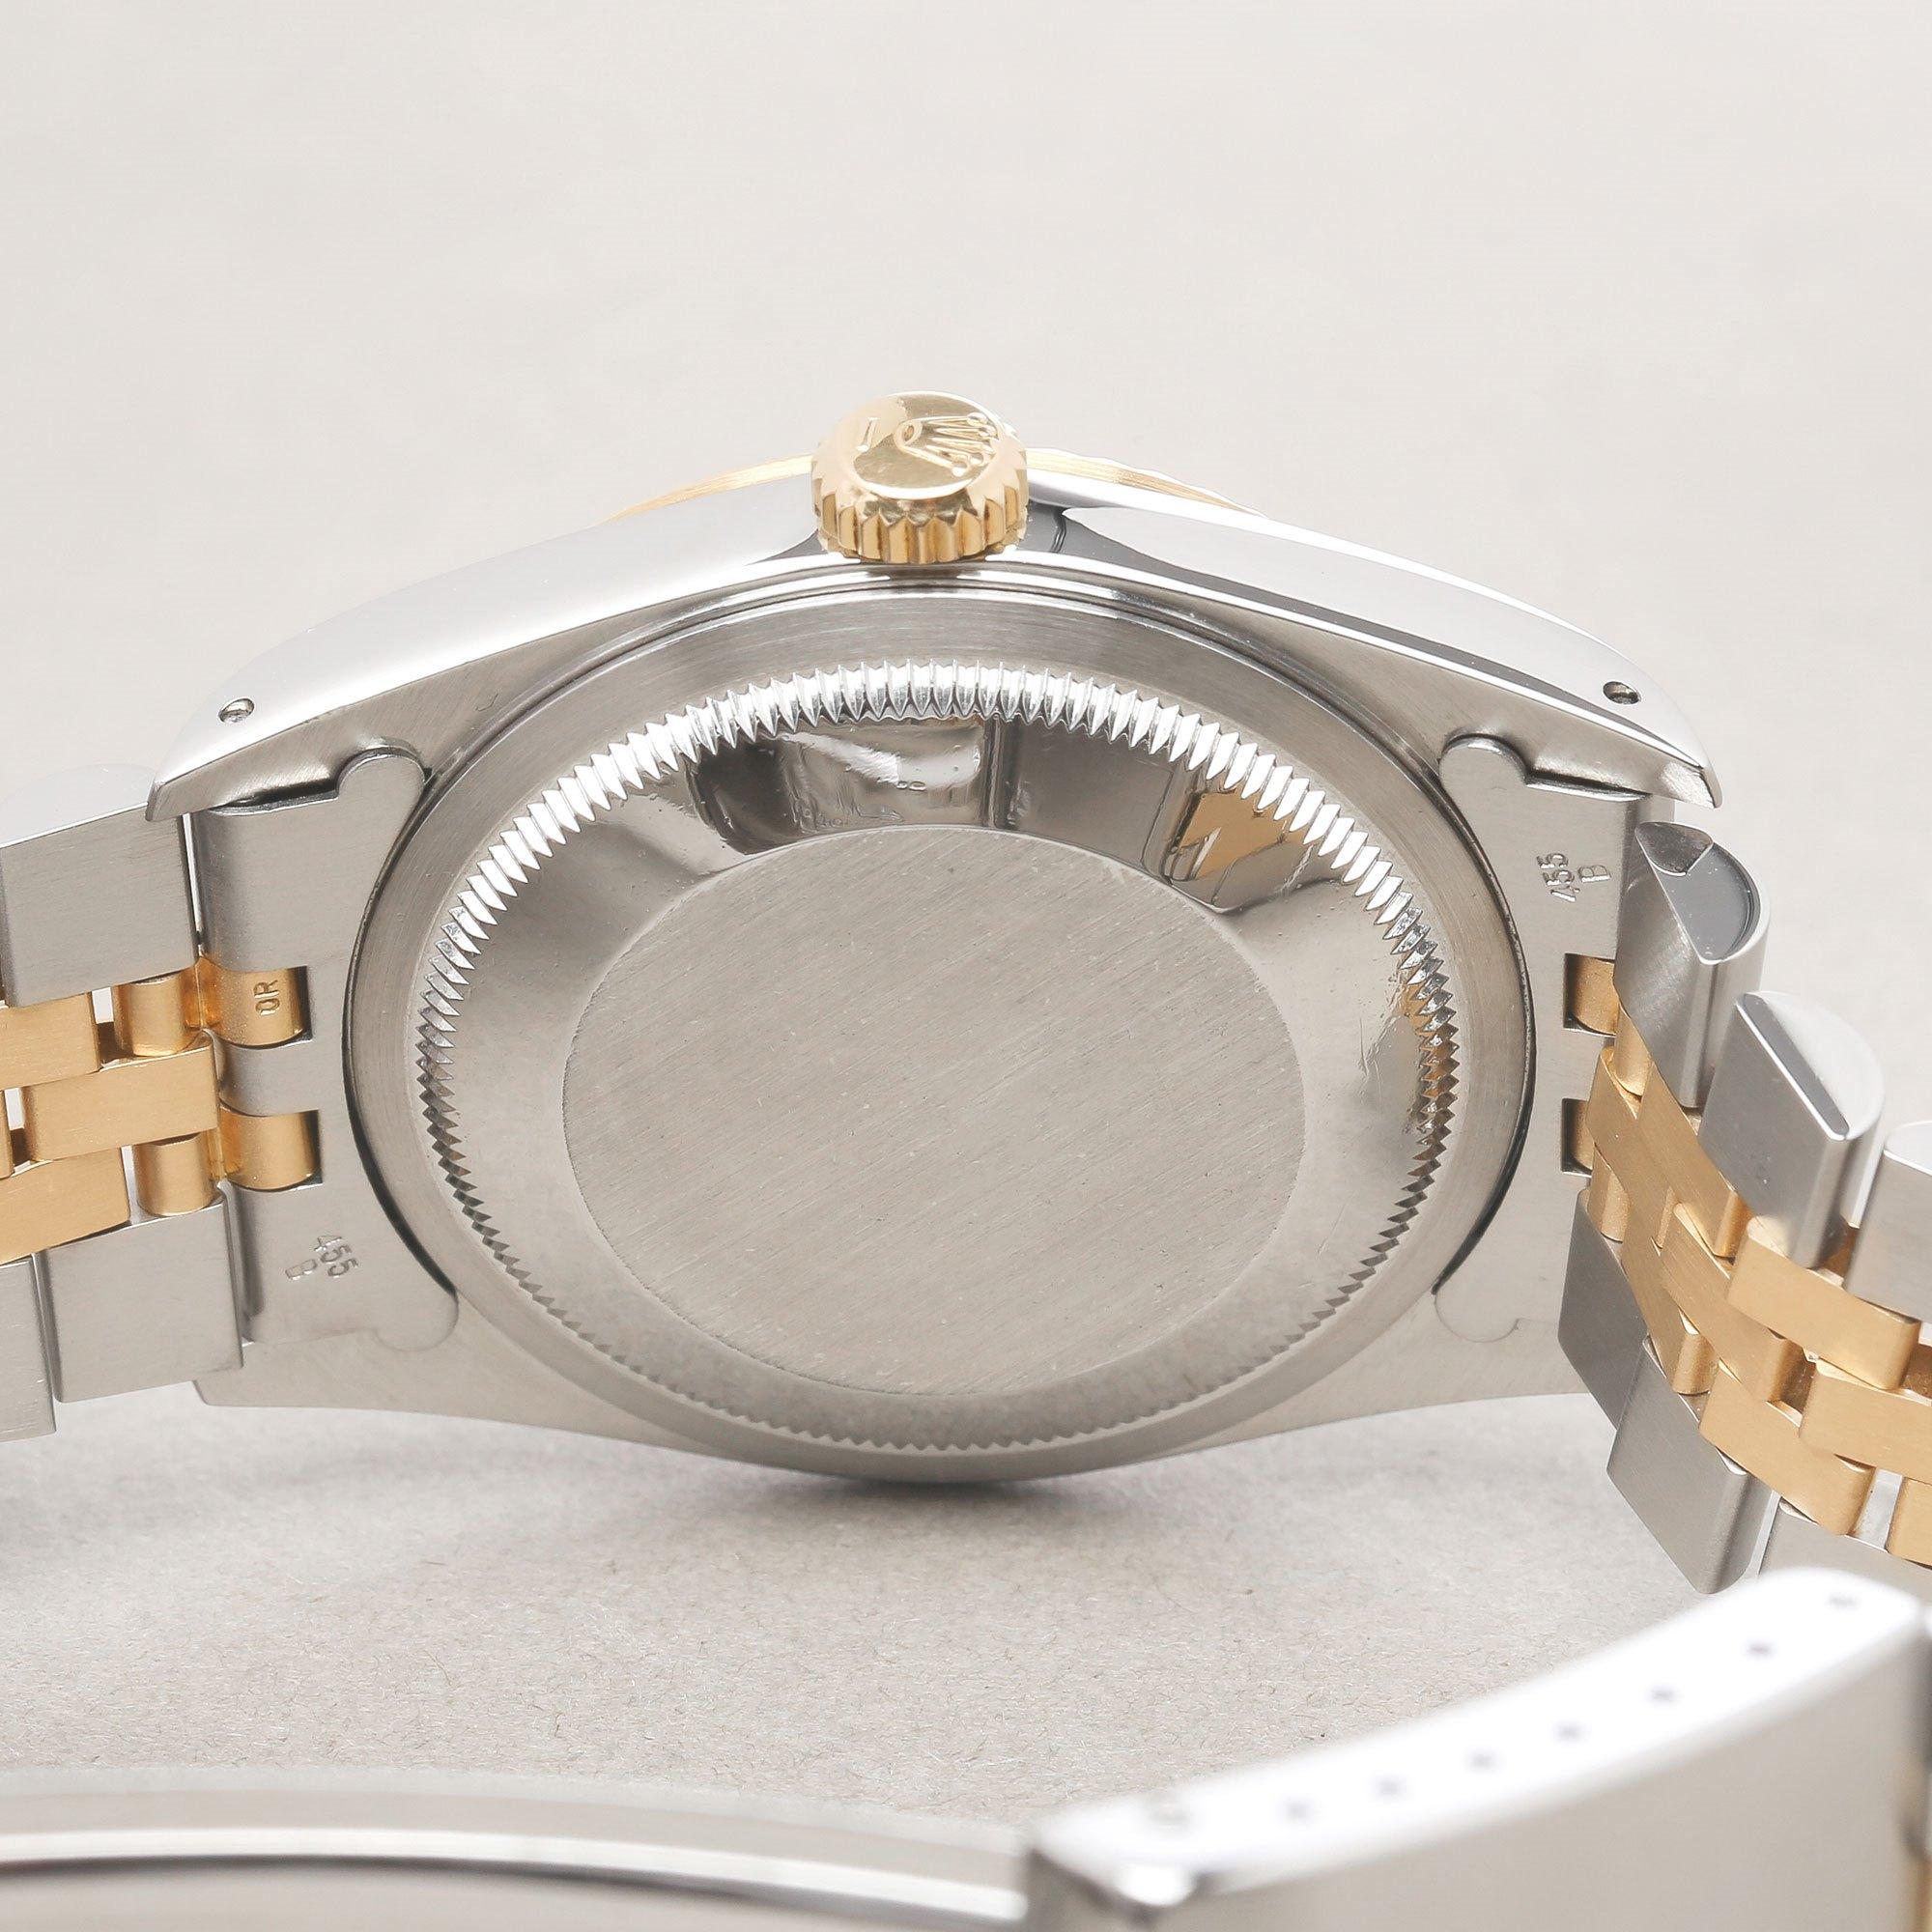 Rolex Datejust 36 16233 Unisex Yellow Gold & Stainless Steel Watch 4